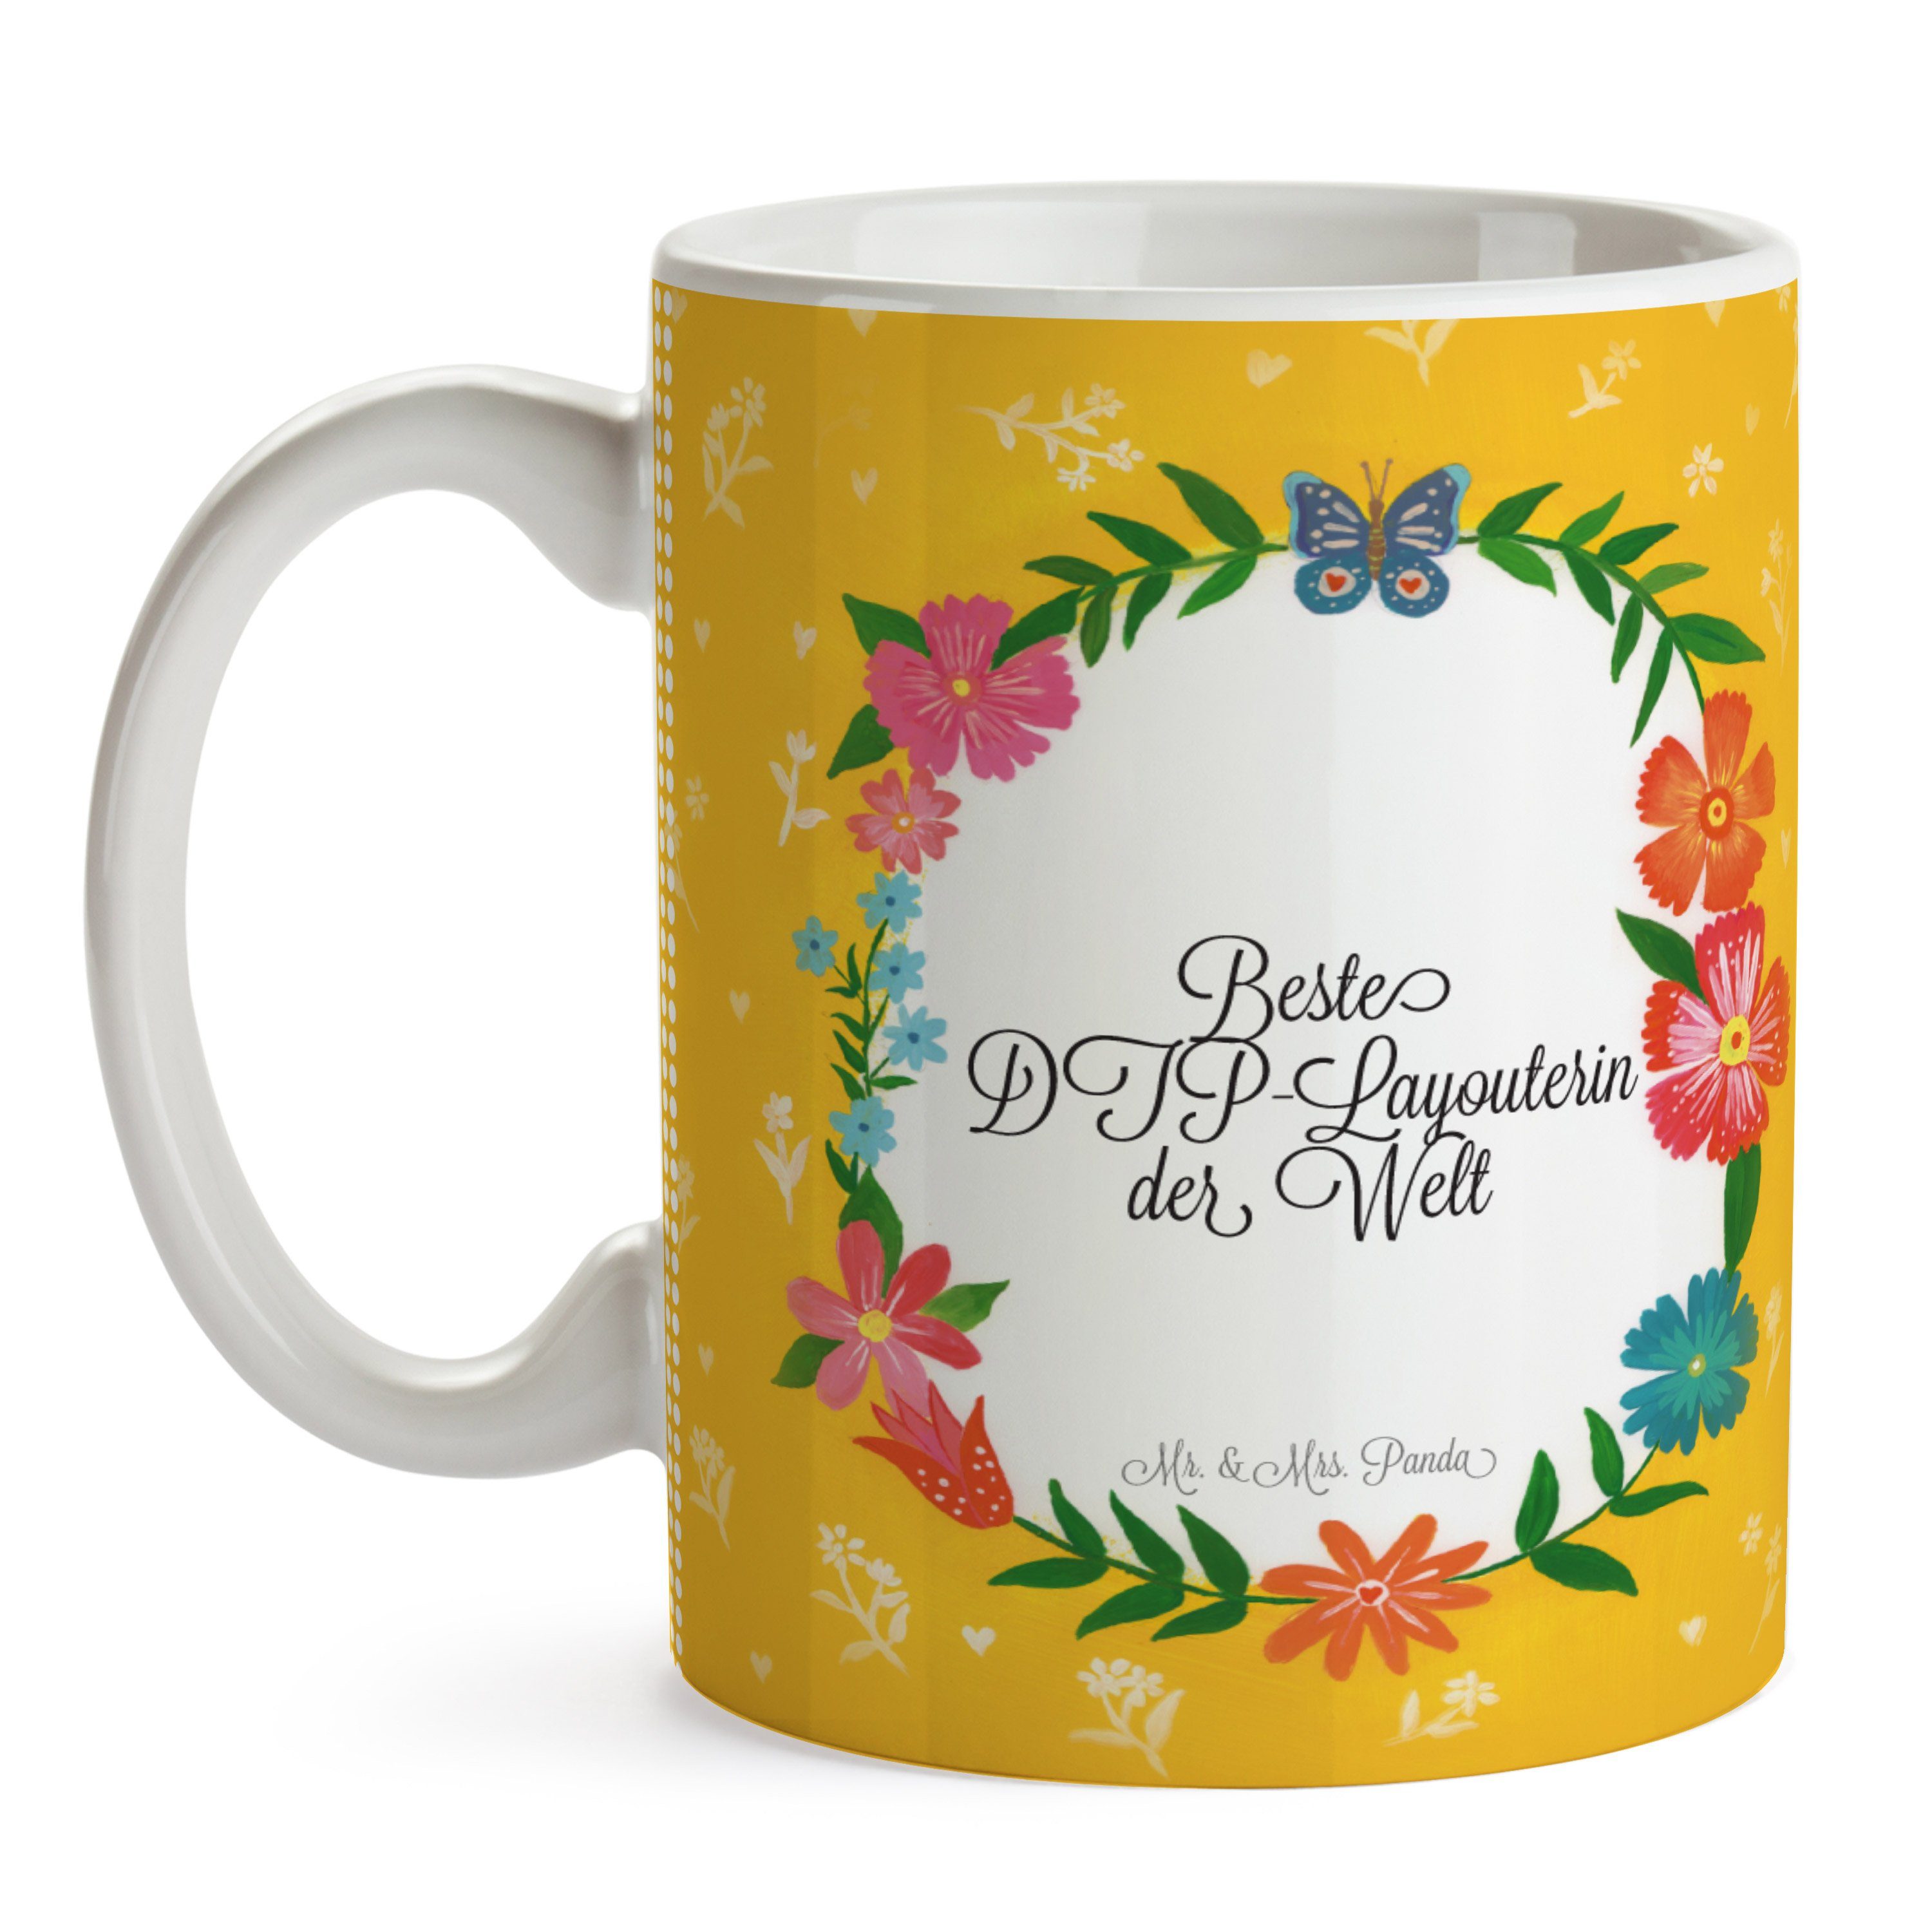 Mr. & Mrs. Gratulation, - Keramiktasse, Geschenk, K, Panda DTP-Layouterin Keramik Tasse Kaffeebecher